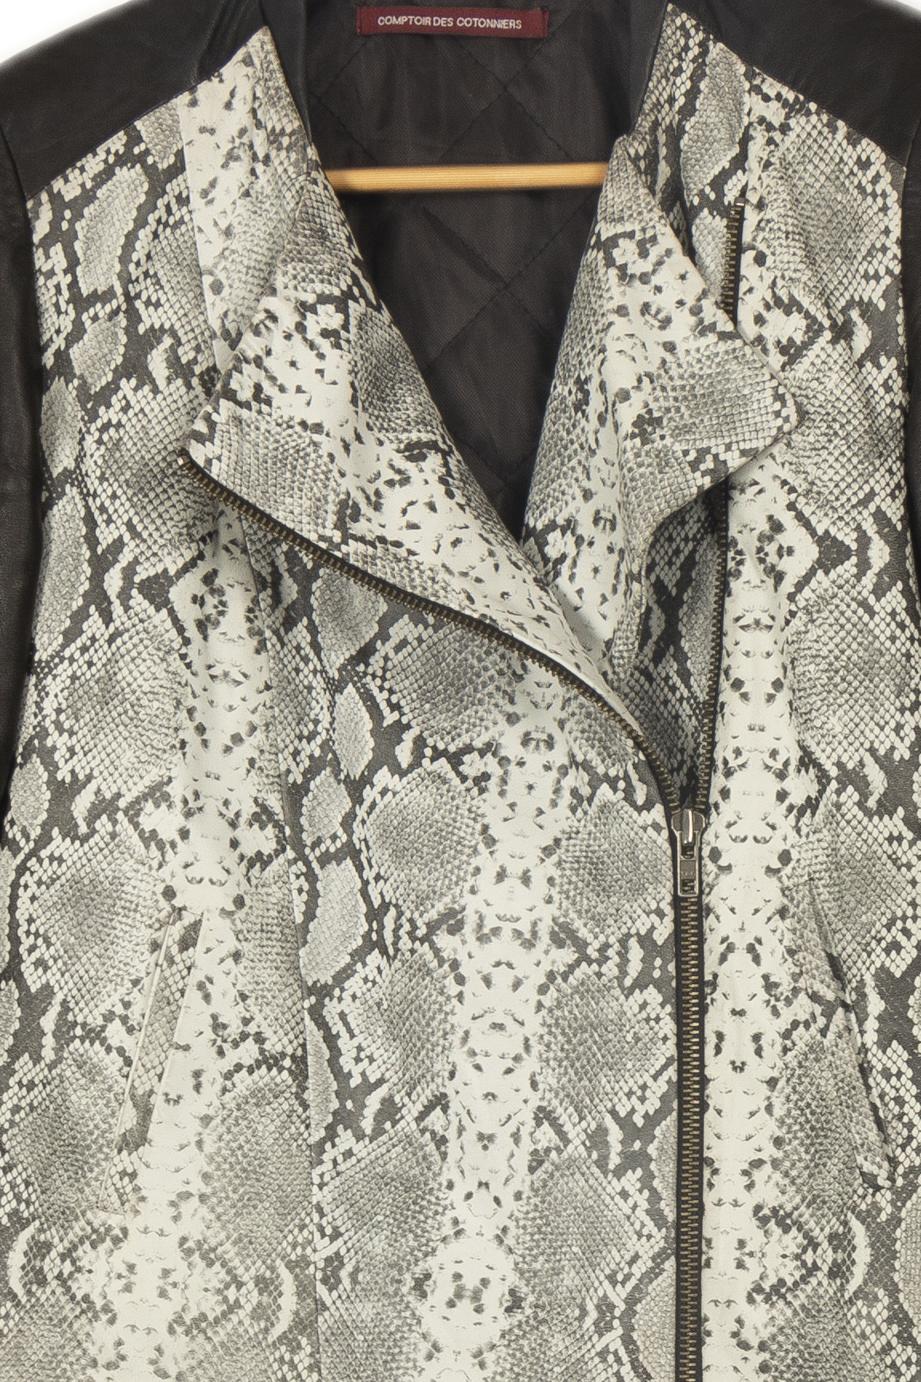 Snakeskin Pattern Jacket